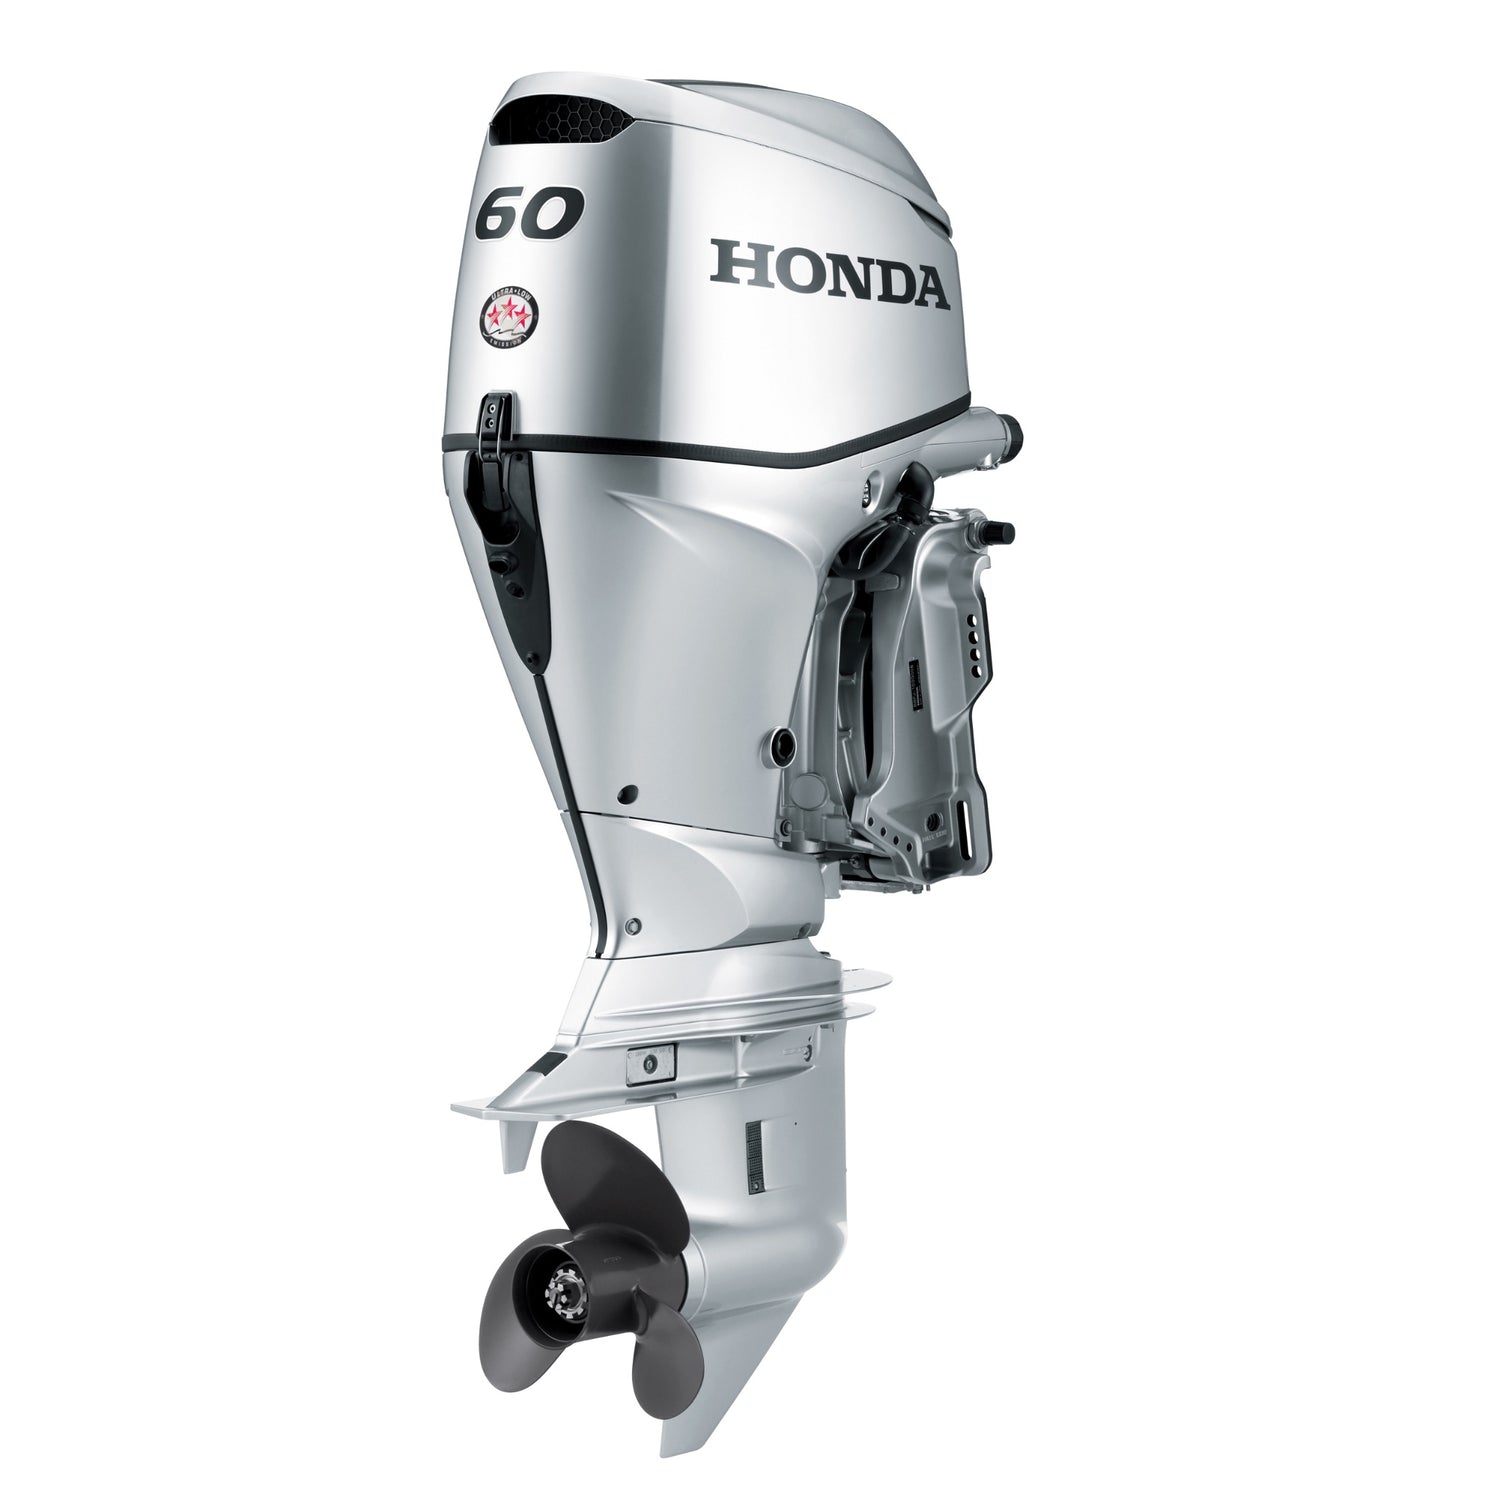 Honda Marine Outboard - BF 60 HP - Power Thrust